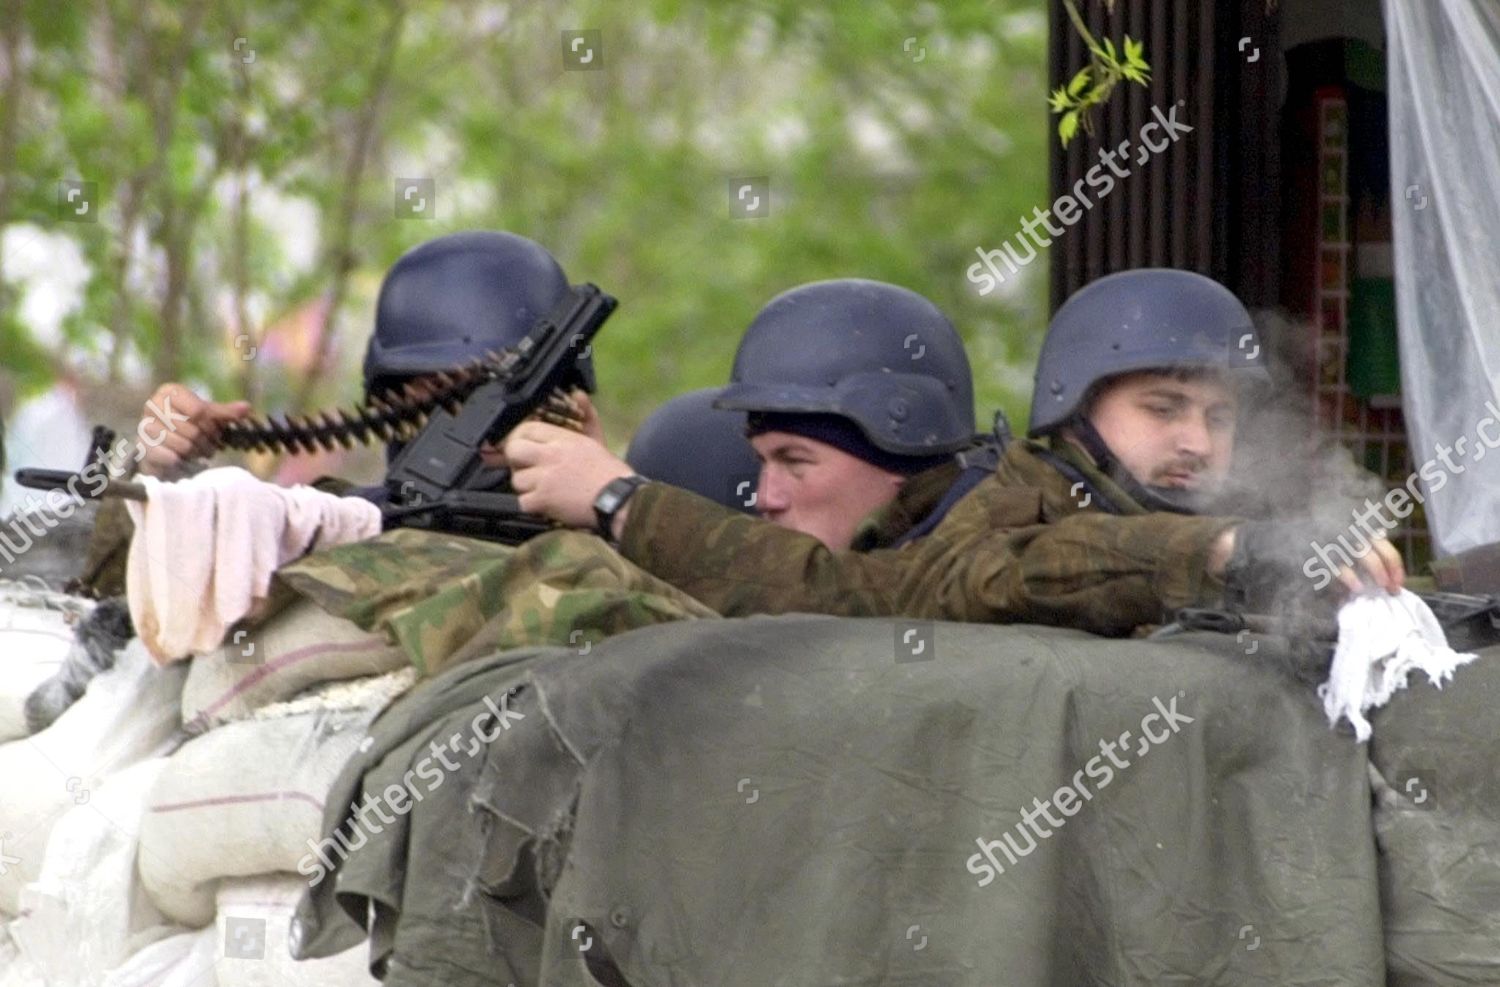 macedonia-police-action-mar-2001-shutterstock-editorial-7712558a.jpg